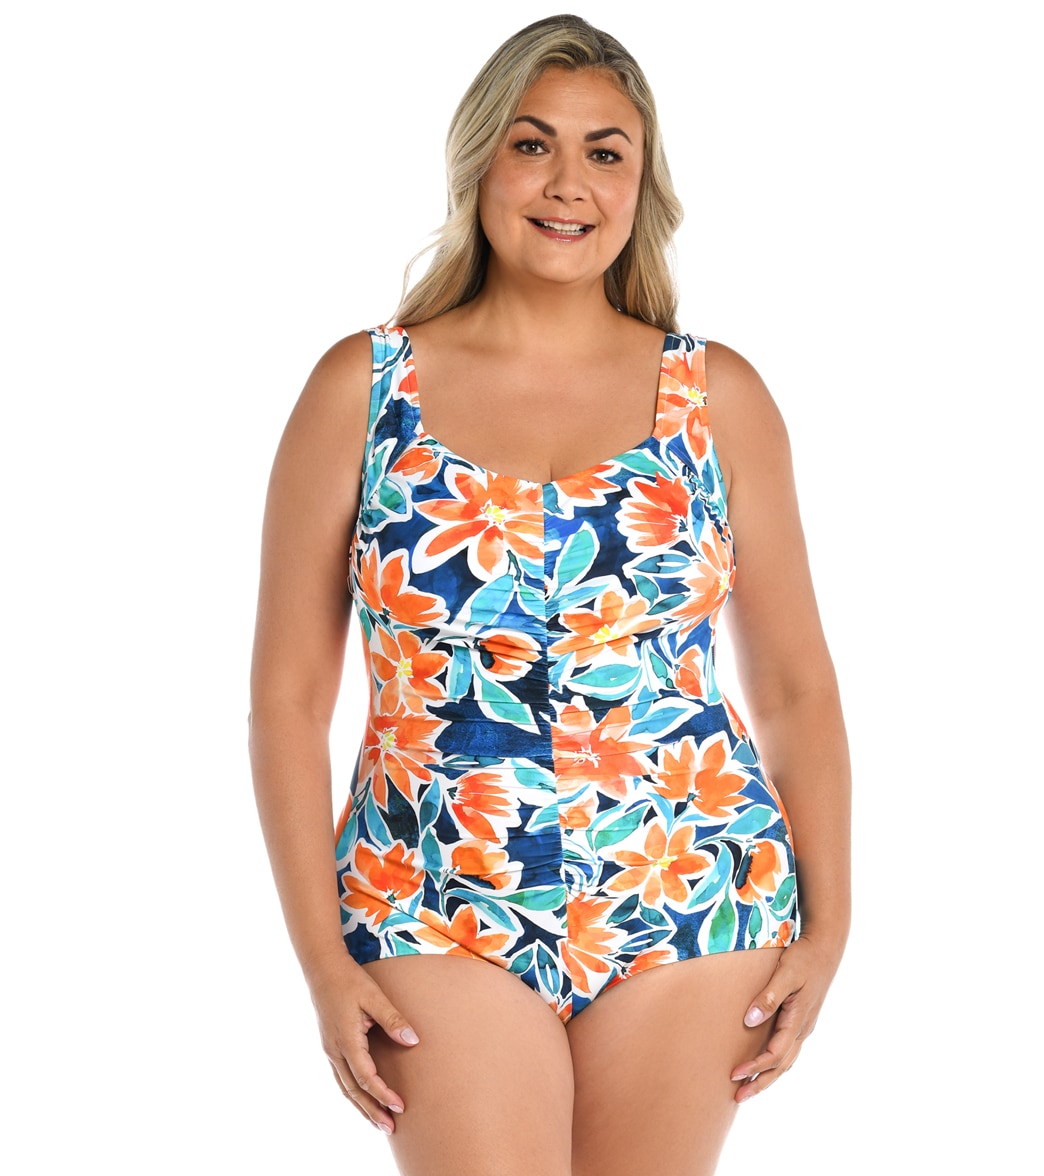 Maxine Women's Plus Size Joyful Blooms Shirred Front Girl Leg One Piece Swimsuit - Multi 16W - Swimoutlet.com